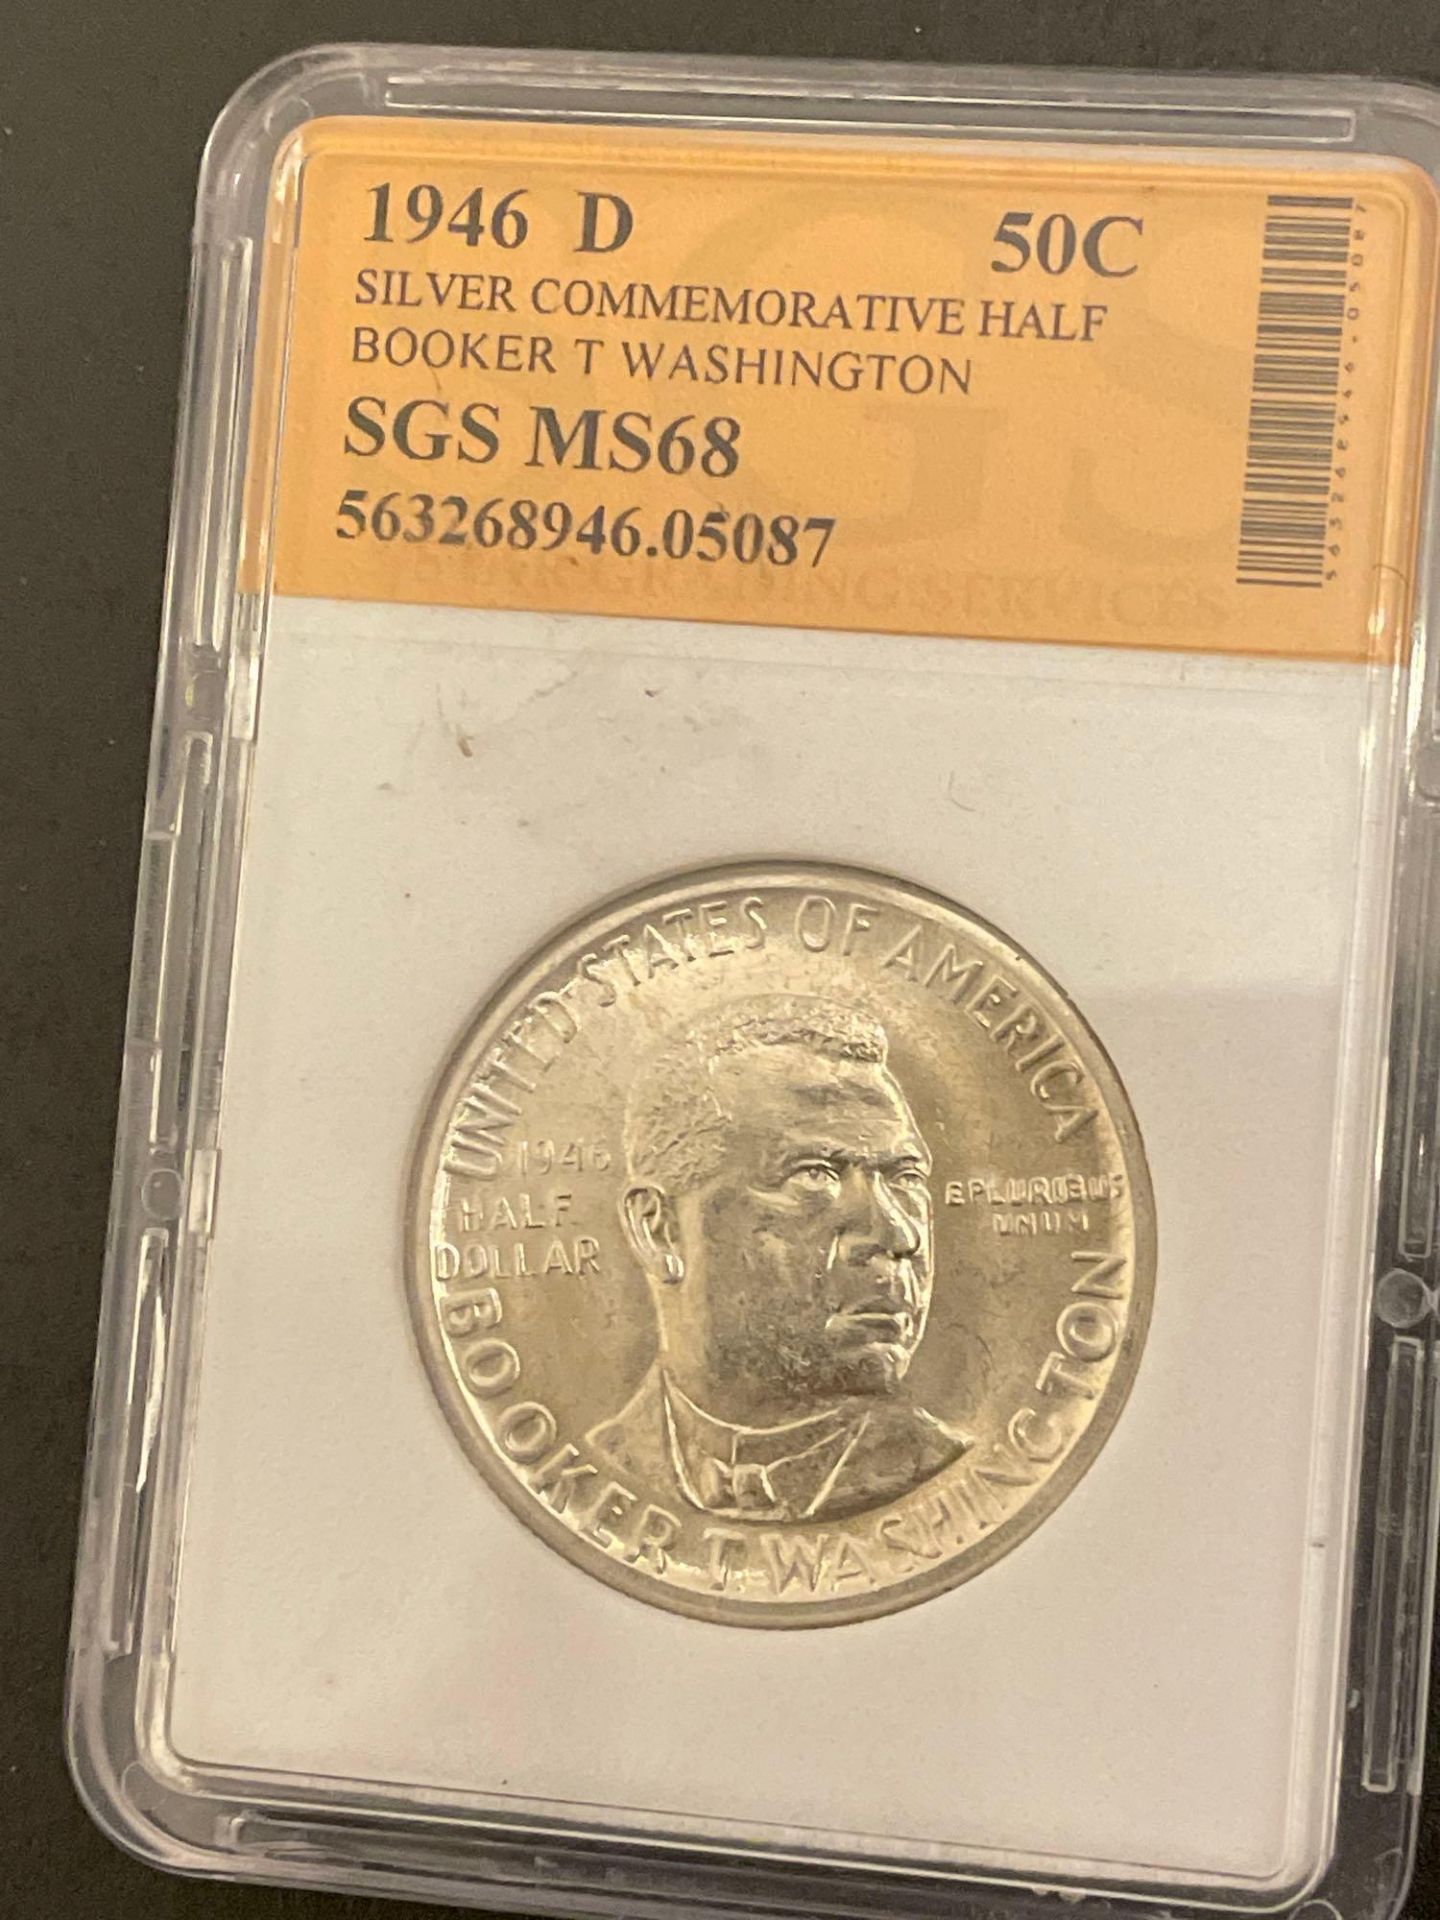 1946 Booker T Washington silver coin - Image 2 of 4